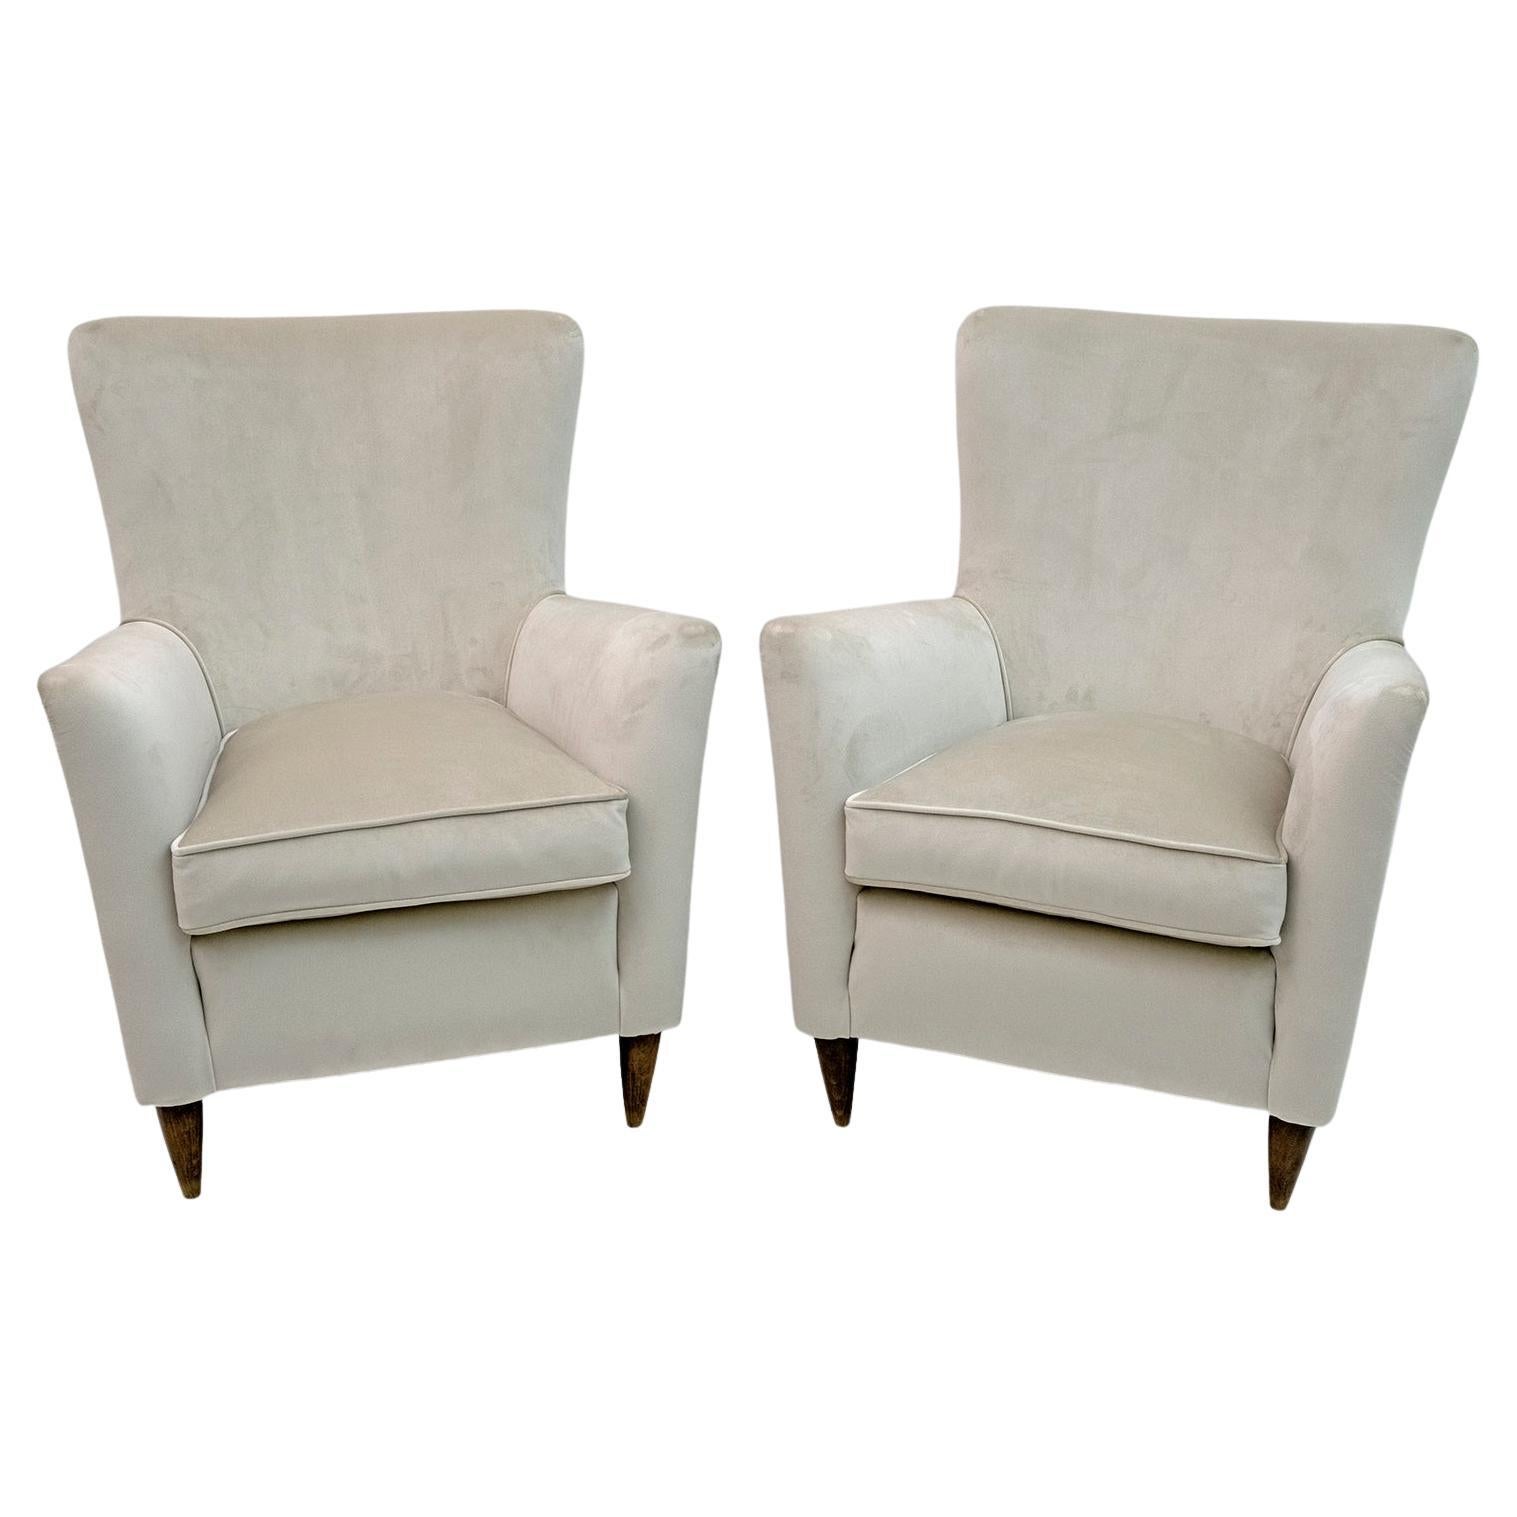 Pair of Gio Ponti Style Mid-Century Modern Italian Velvet Armchairs for Isa, 50s For Sale